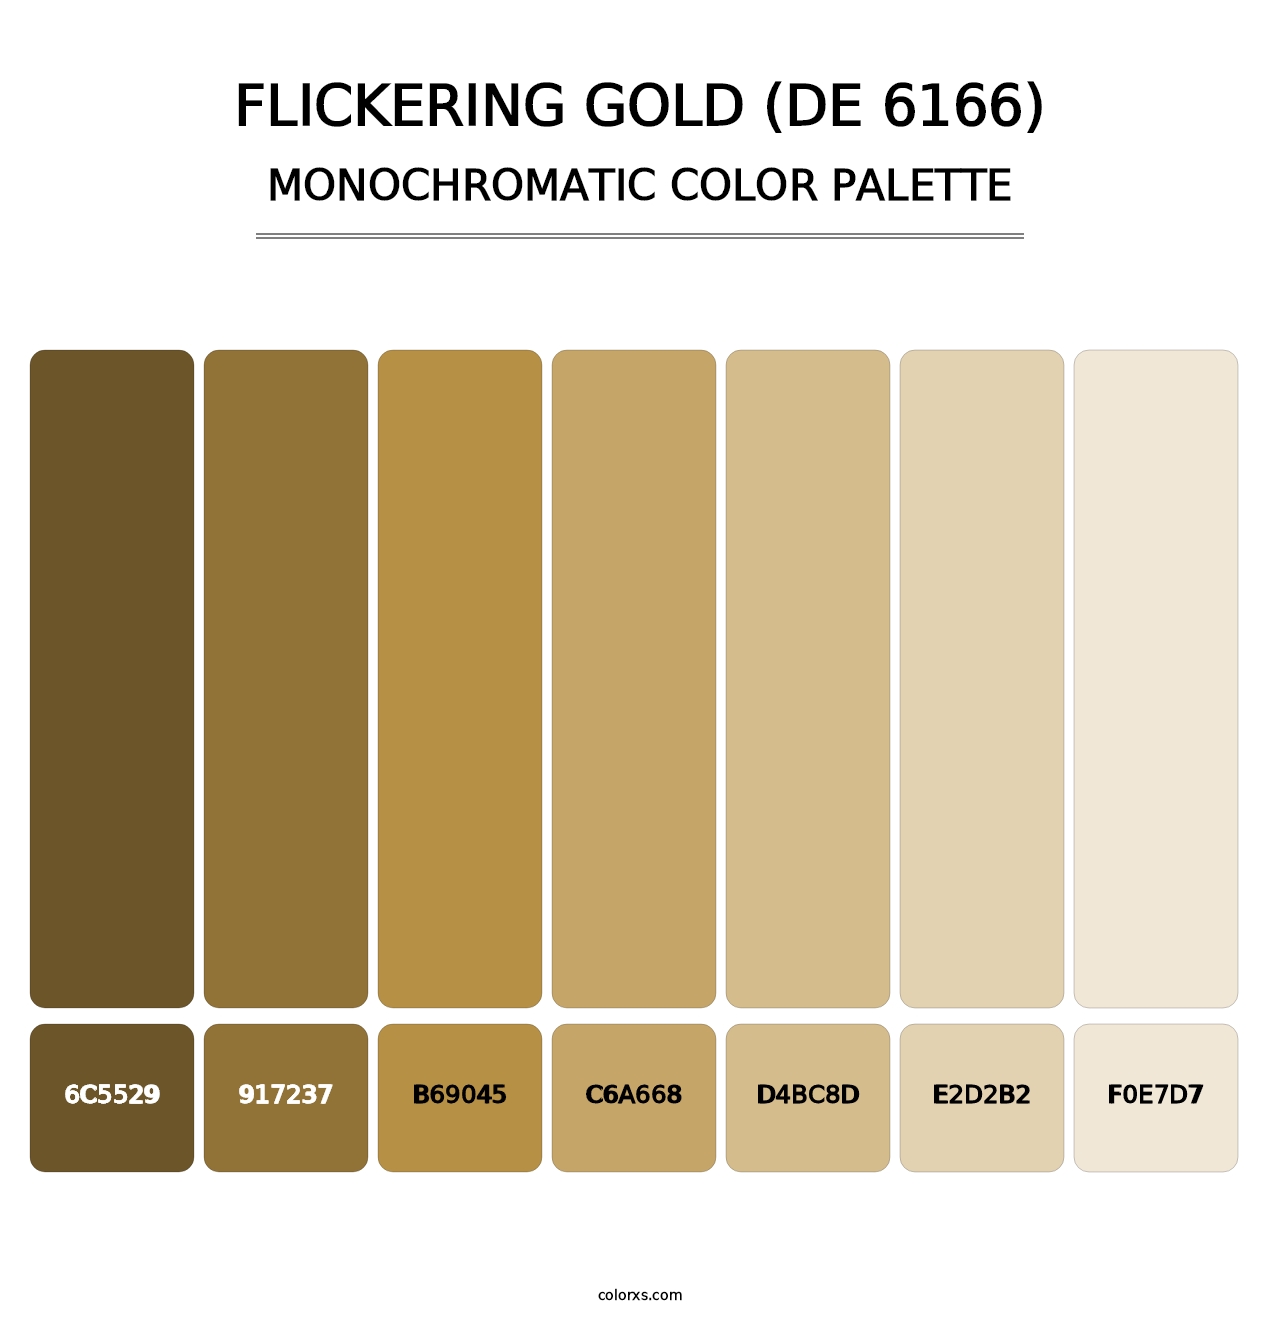 Flickering Gold (DE 6166) - Monochromatic Color Palette